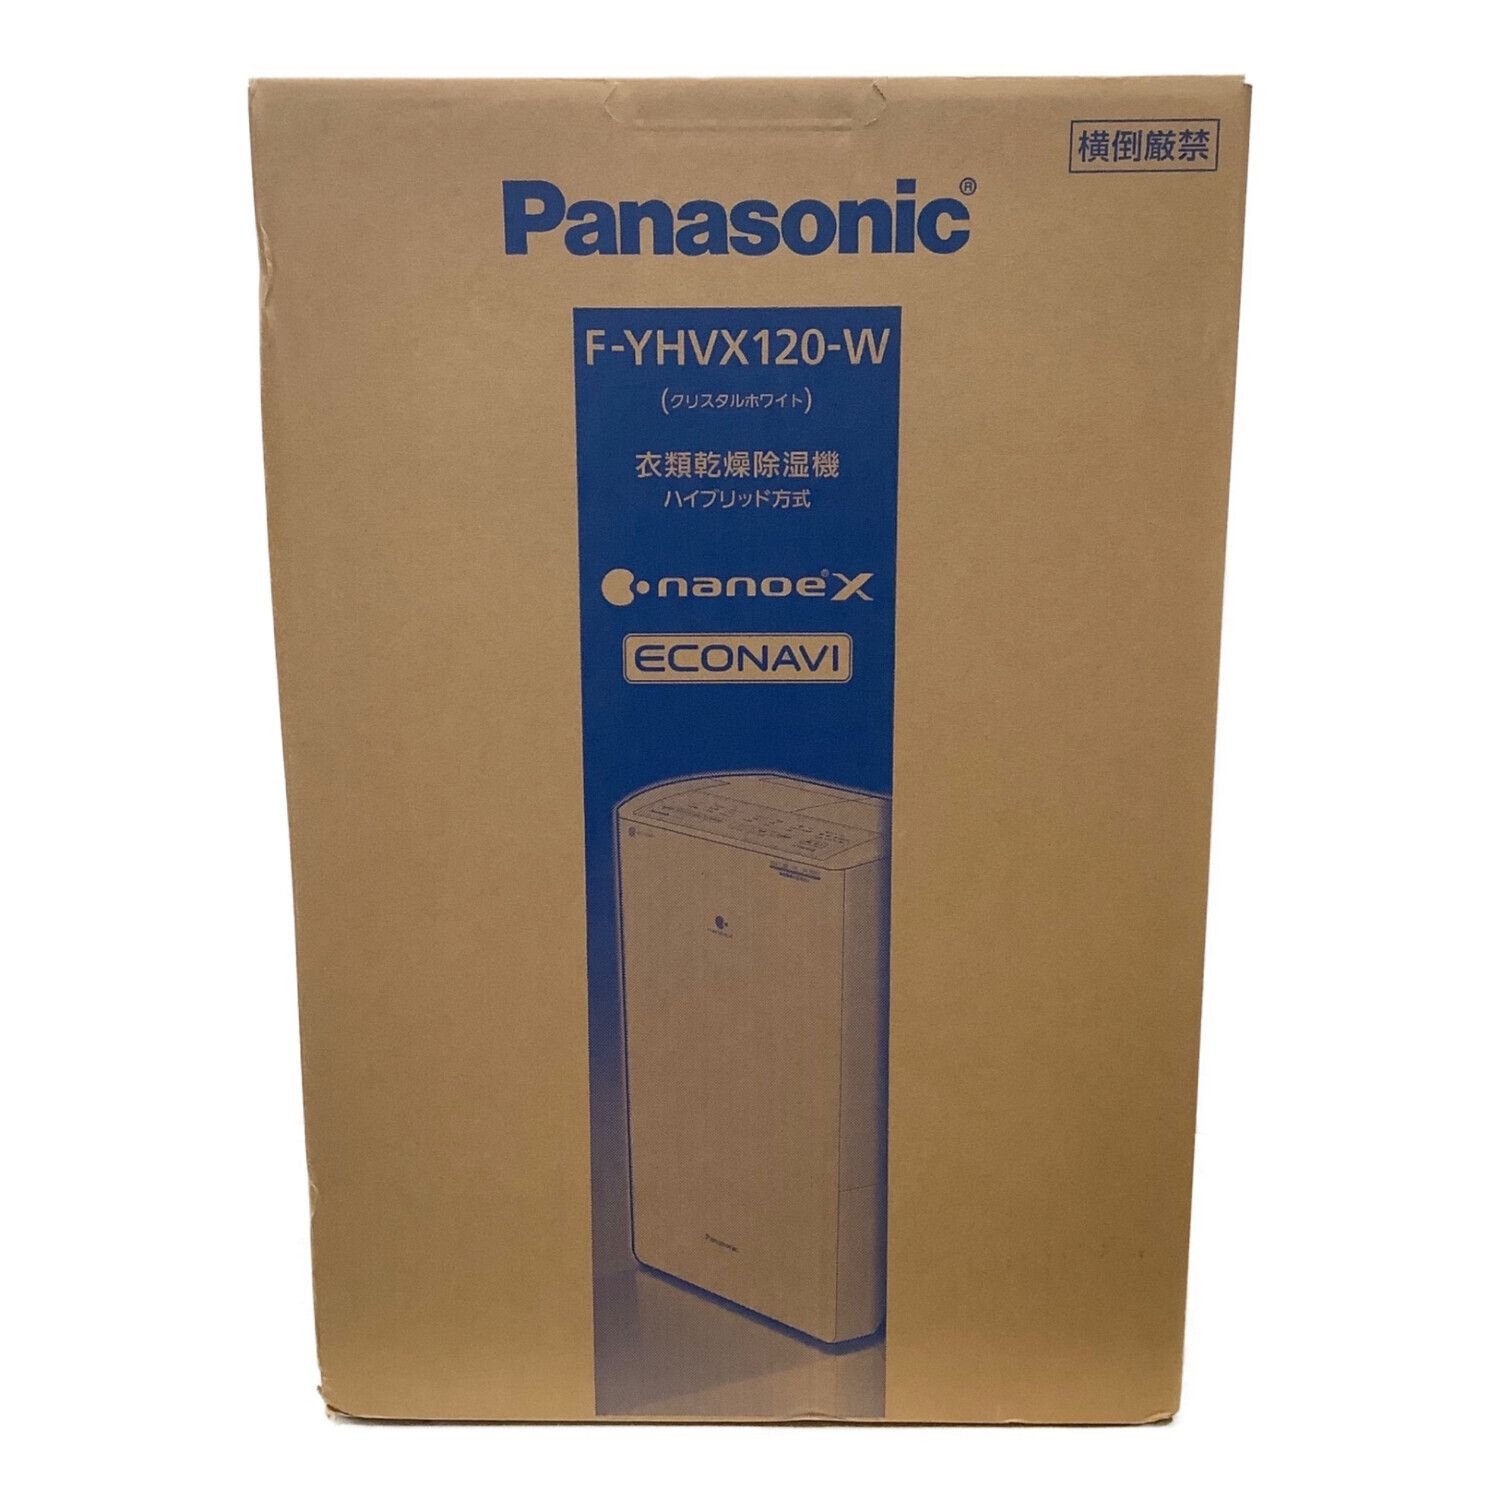 Panasonic 衣類乾燥除湿機 ハイブリッド式F-YHVX120-W - 空調